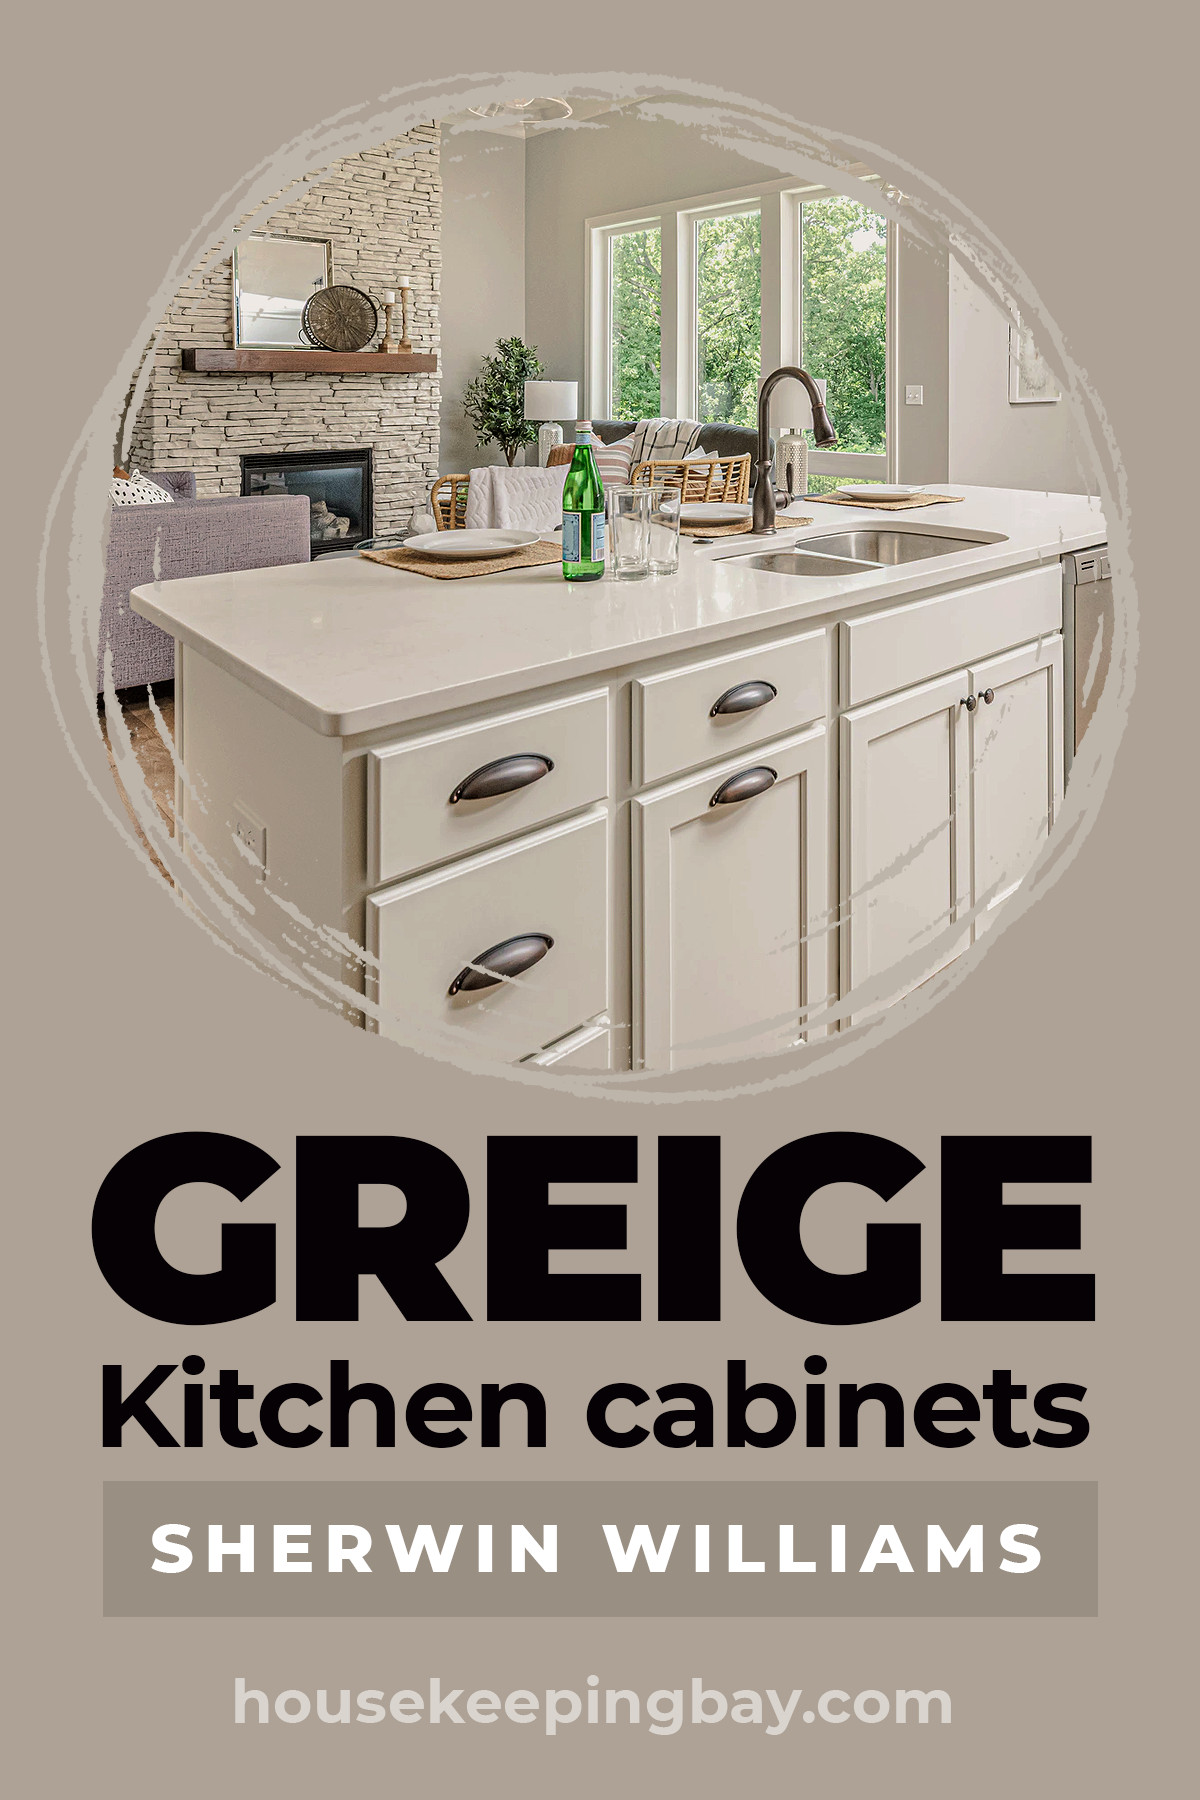 Greige kitchen cabinets – Sherwin Williams